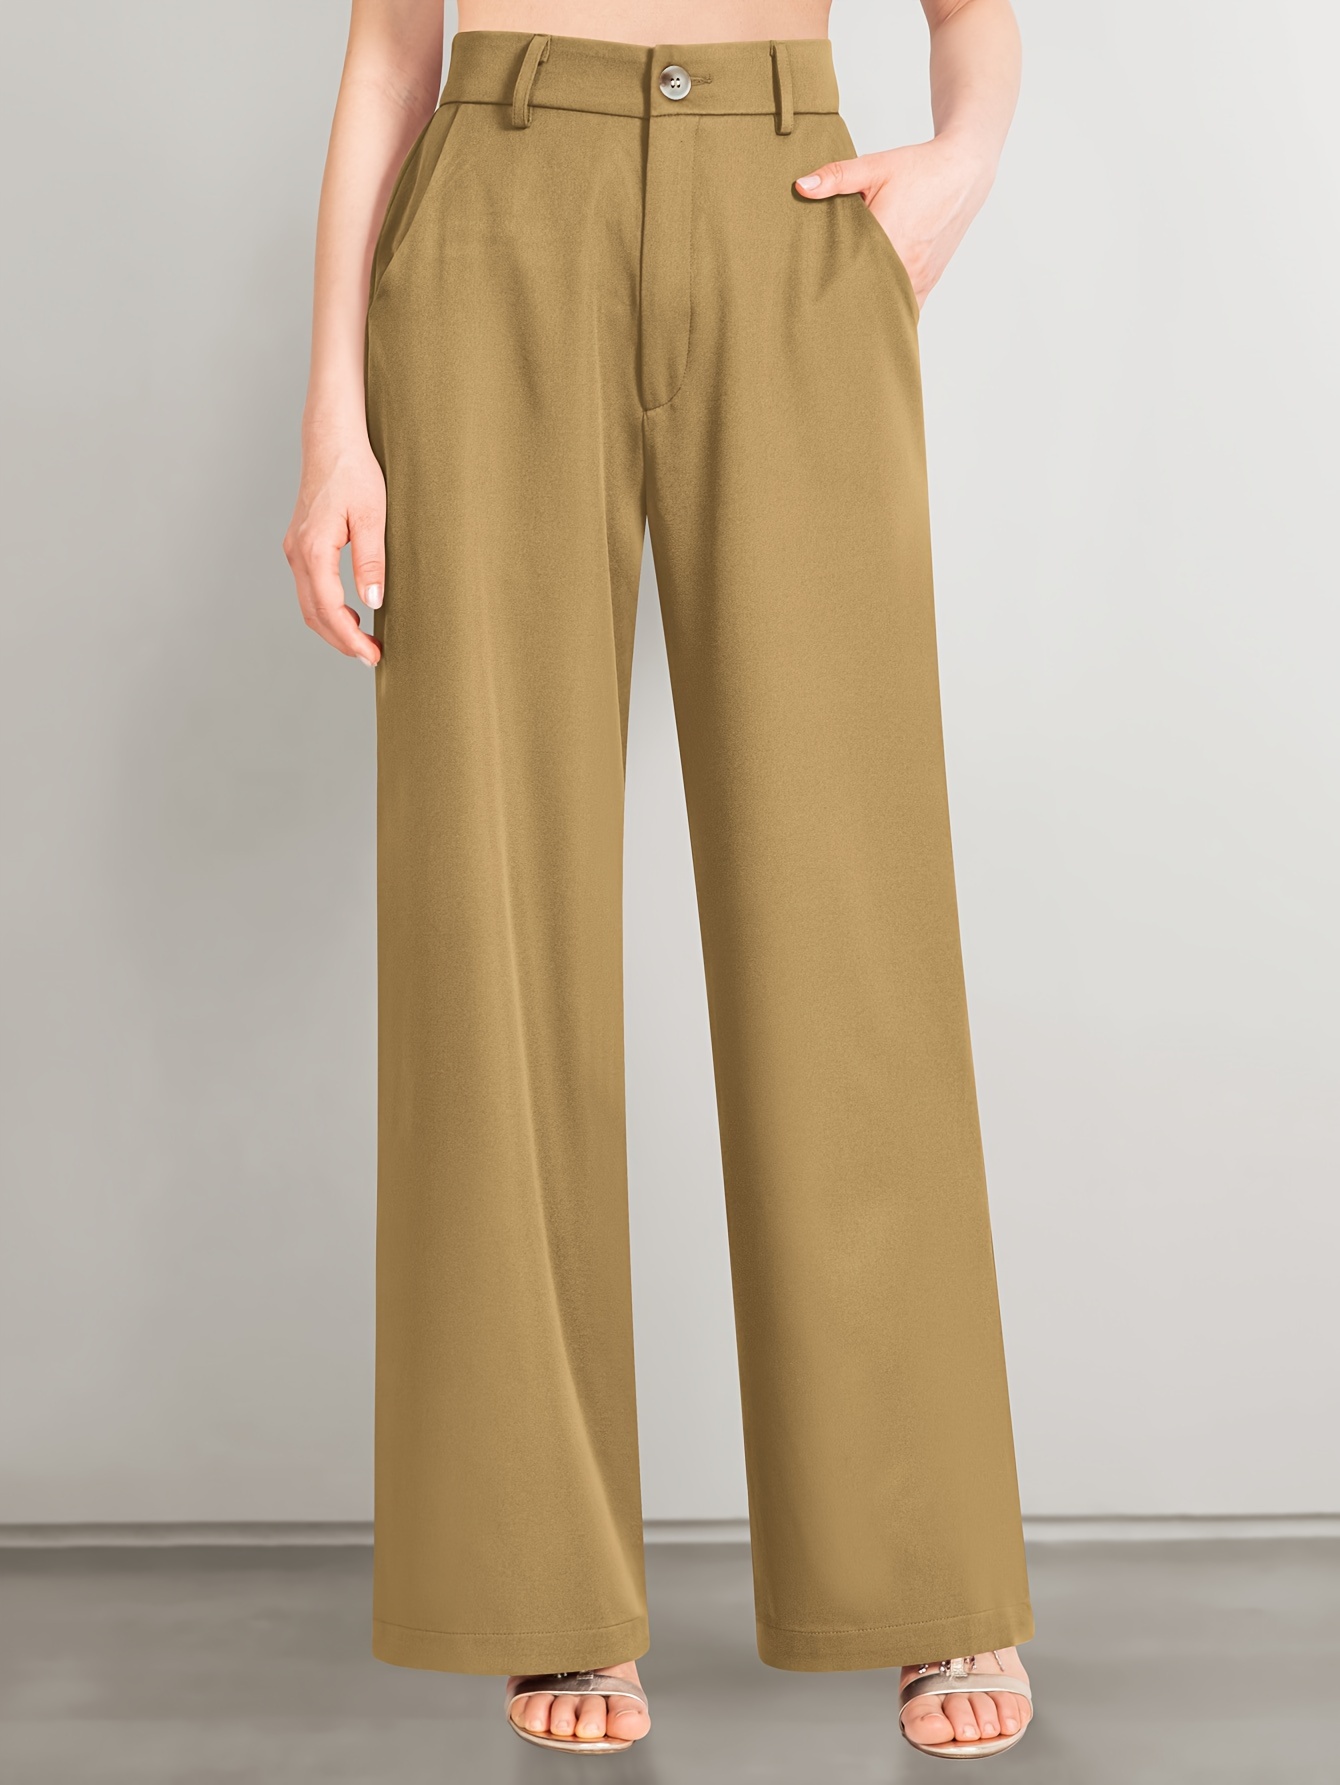 Women's Plus Size High Waist Slant Pocket Straight Tailored Pants 2XL(16) 